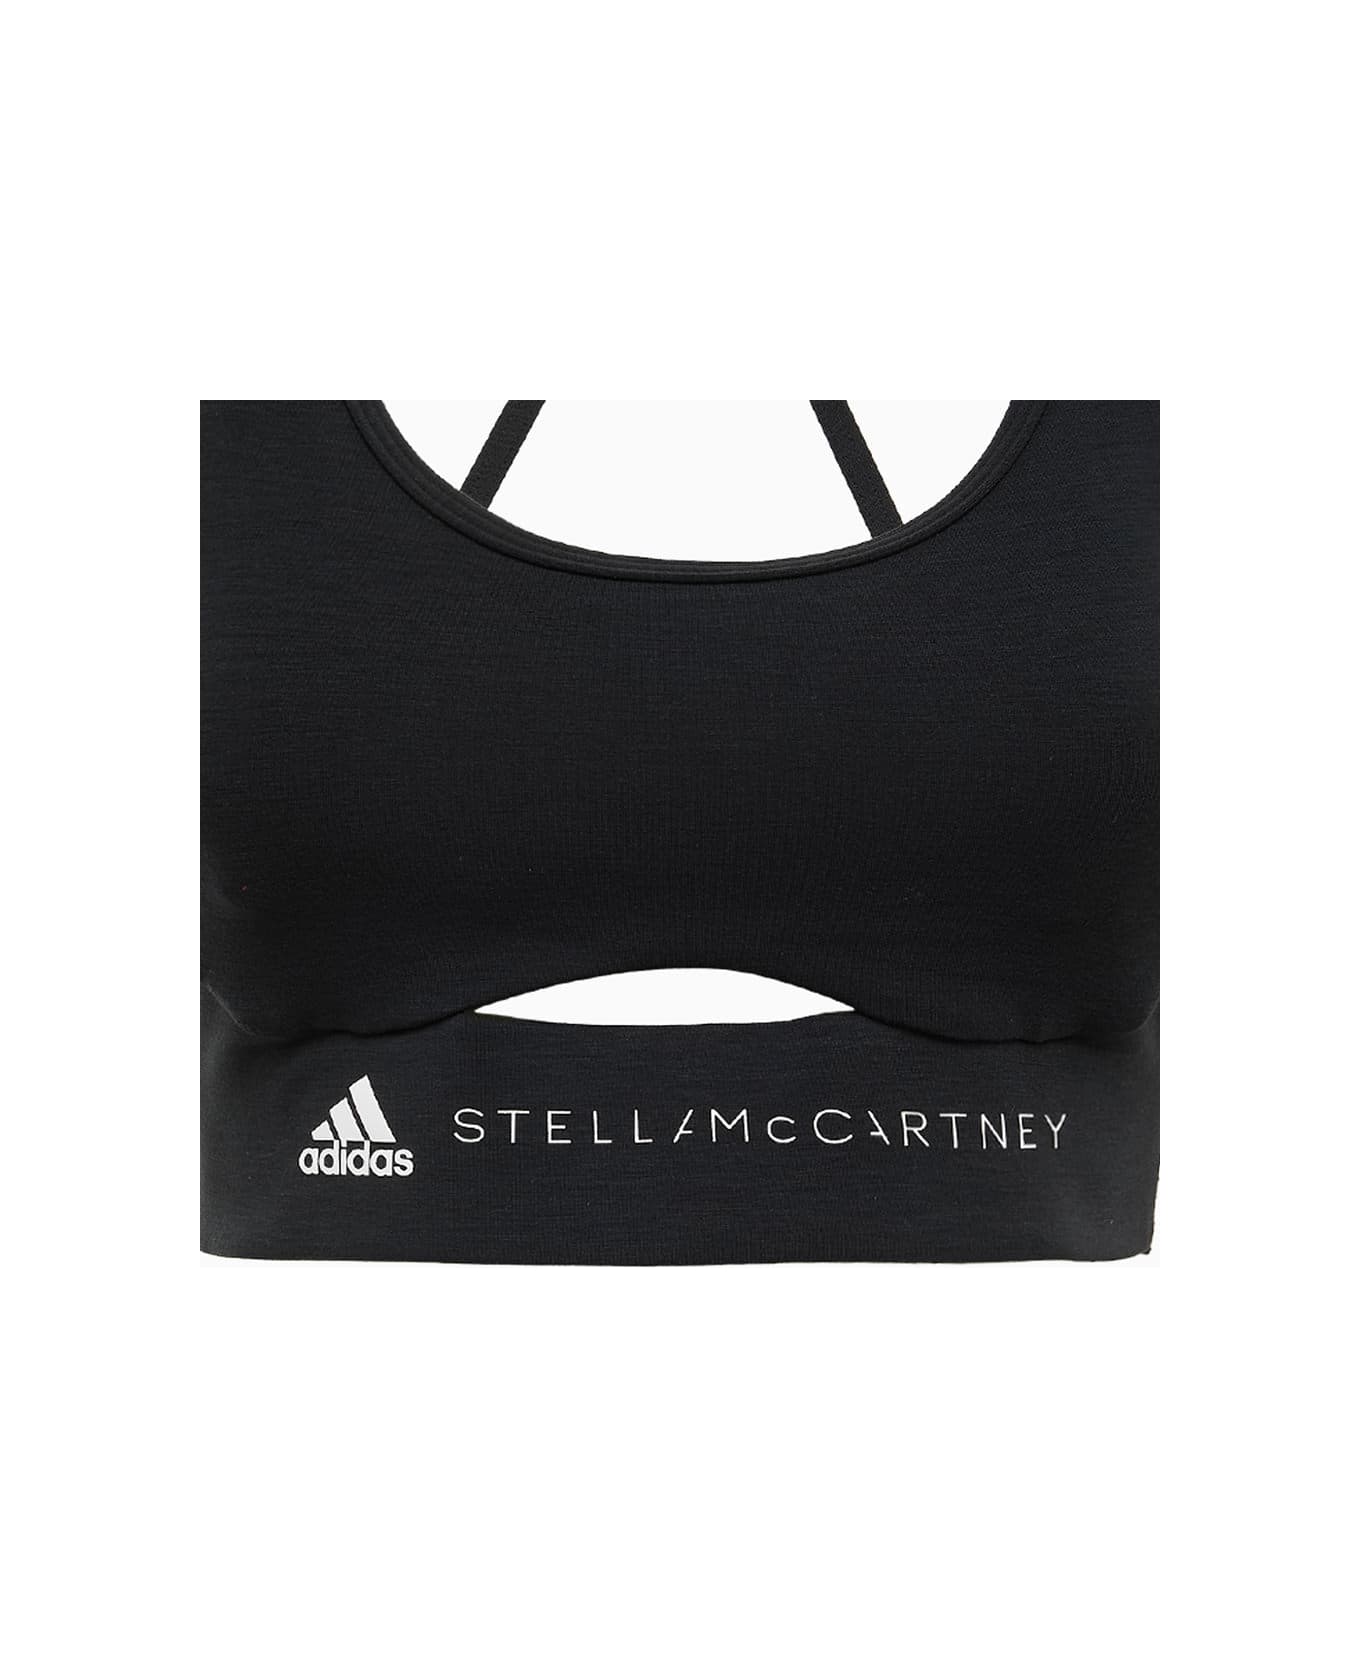 Adidas by Stella McCartney Truestrength Yoga Medium Support Sports Bra - BLACK/WHITE